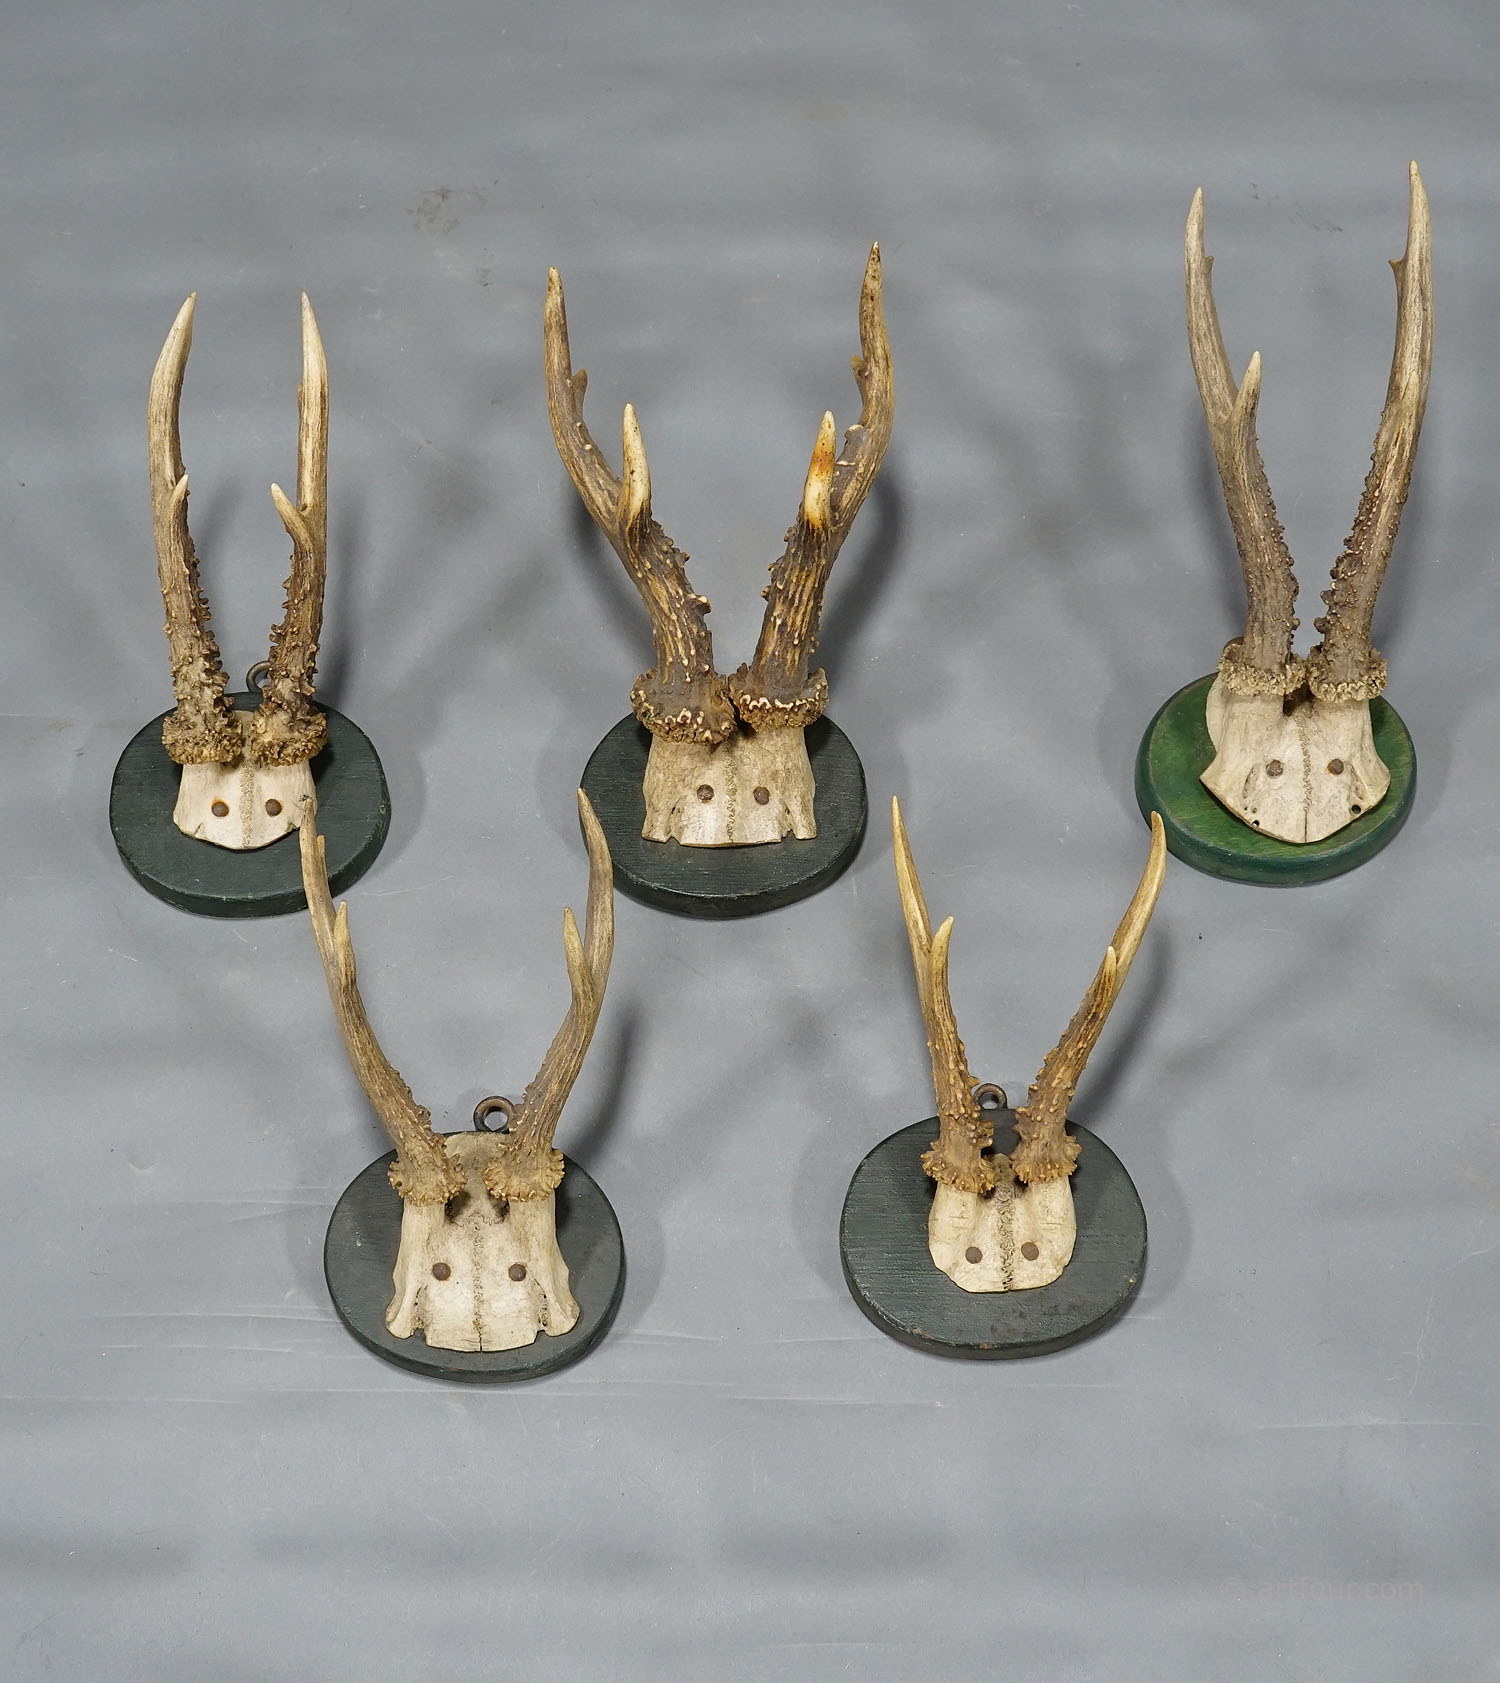 A Set of Five Antique Black Forest Deer Trophies on Wooden Plaques 1880s